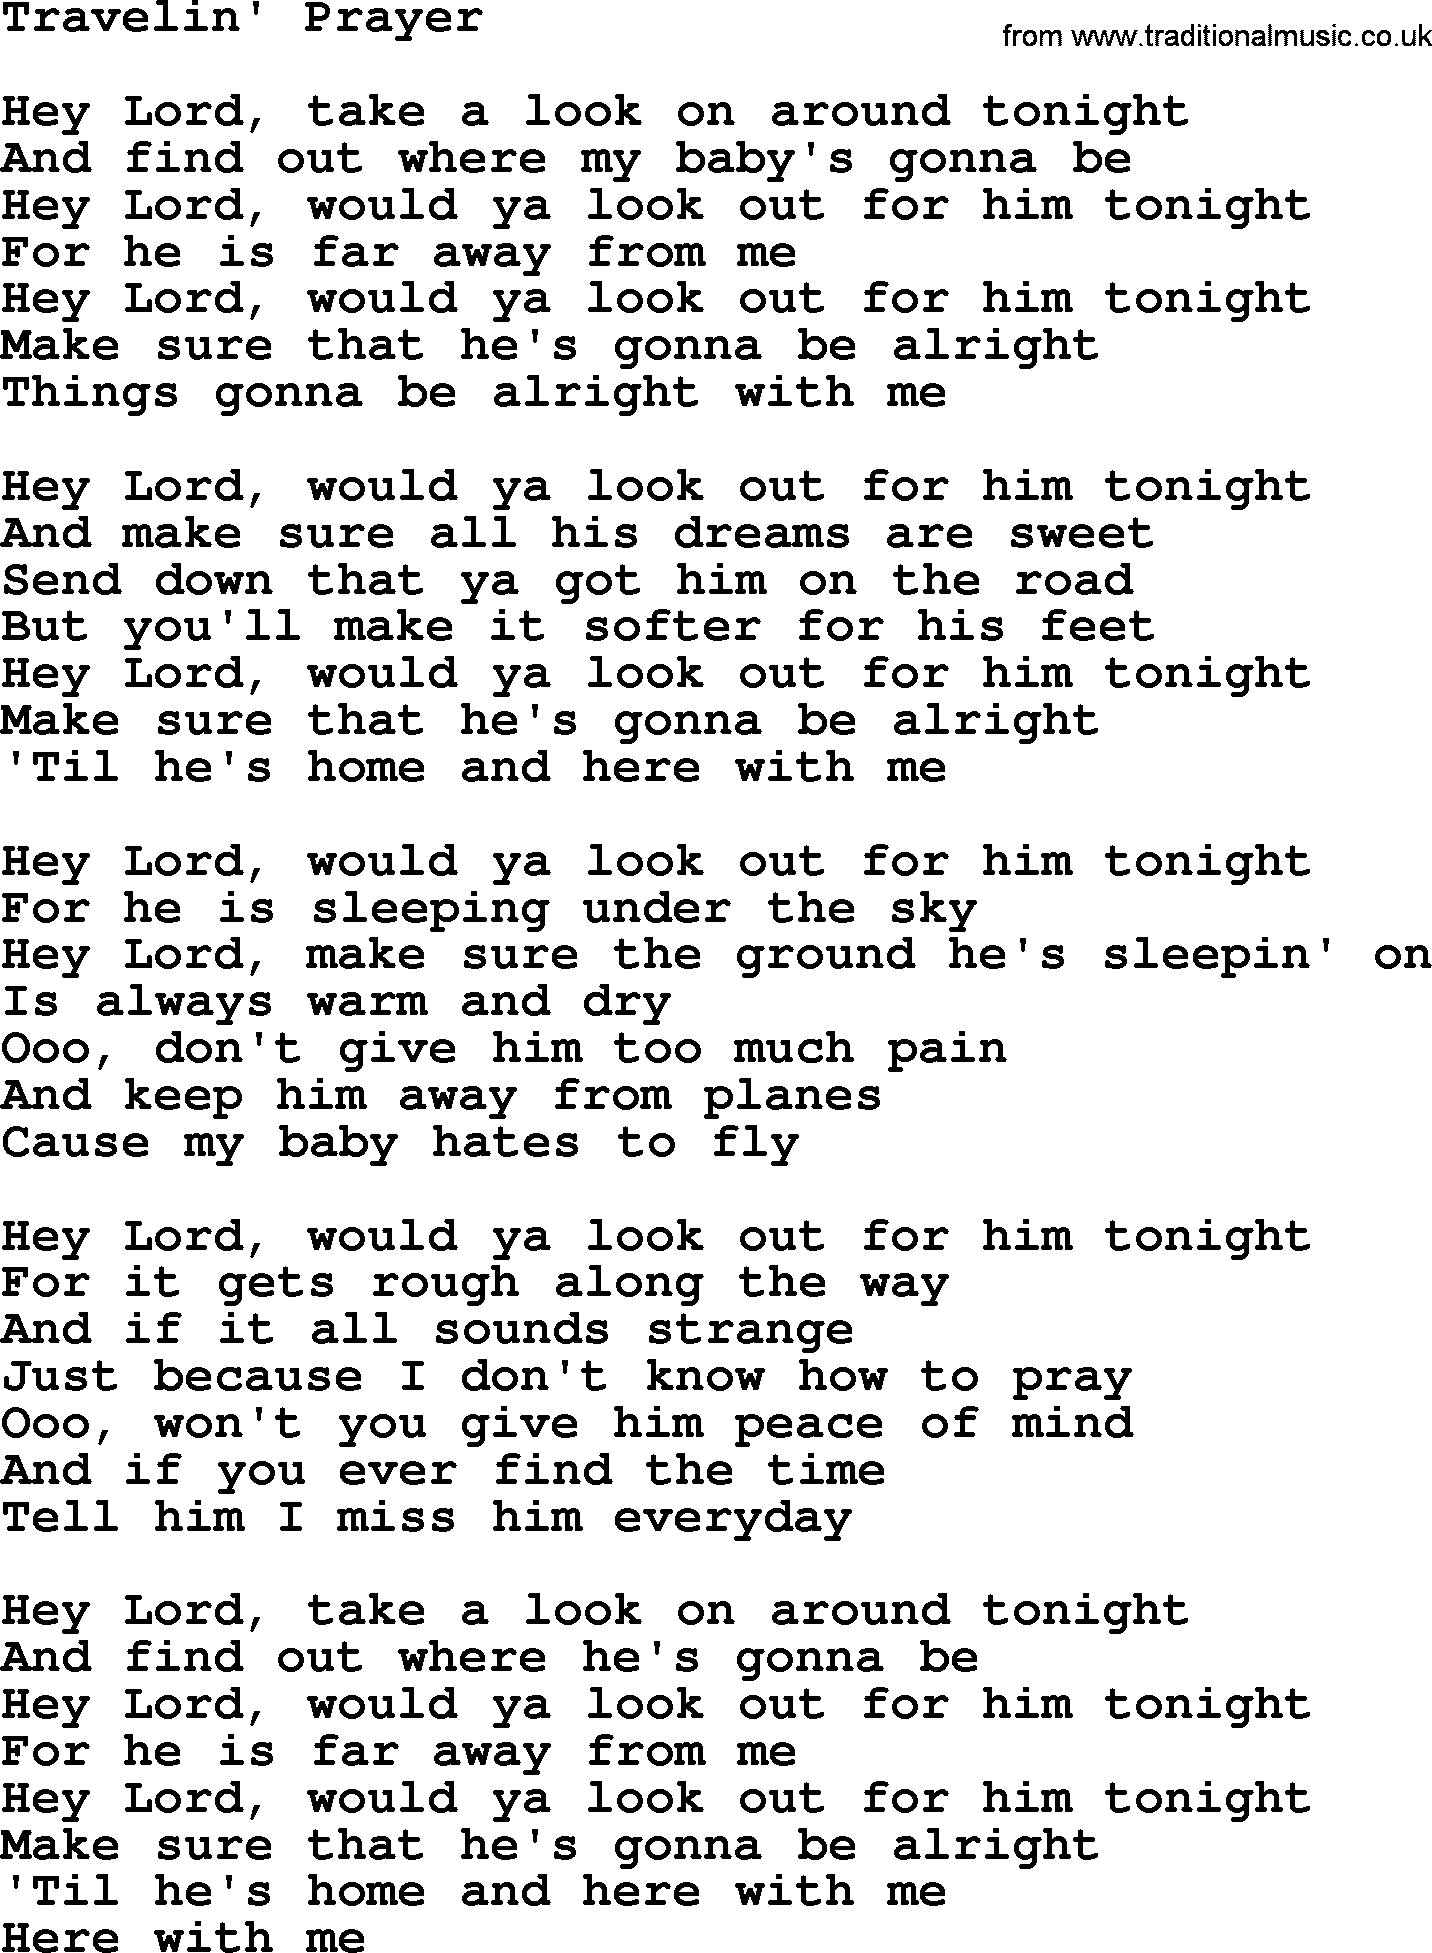 Dolly Parton song Travelin' Prayer.txt lyrics